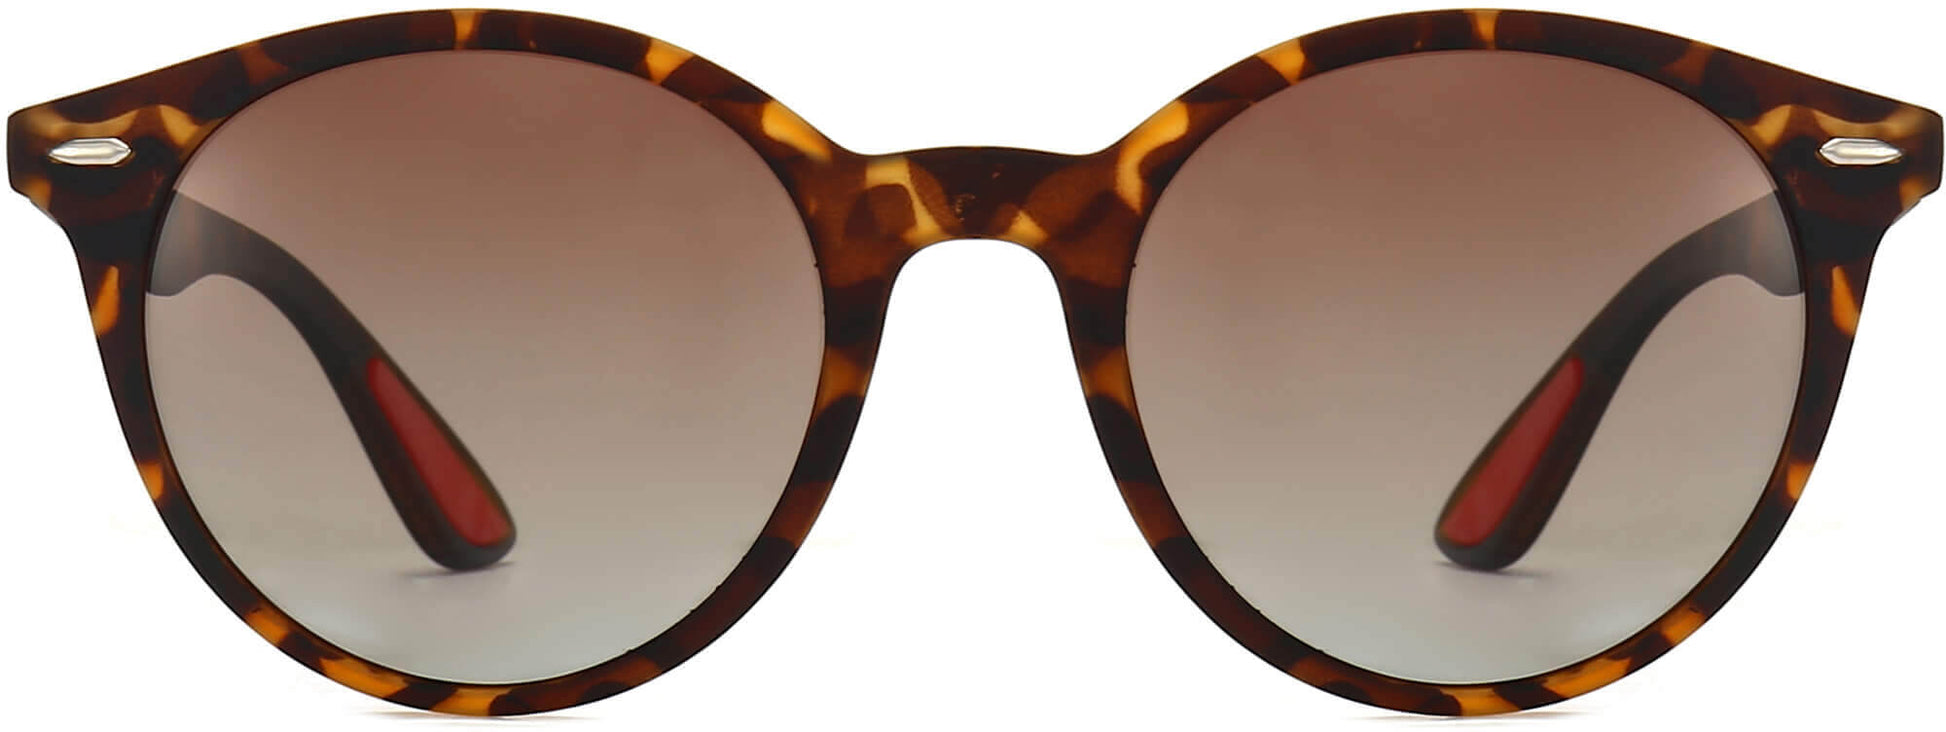 Melanie Tortoise Plastic Sunglasses from ANRRI, front view